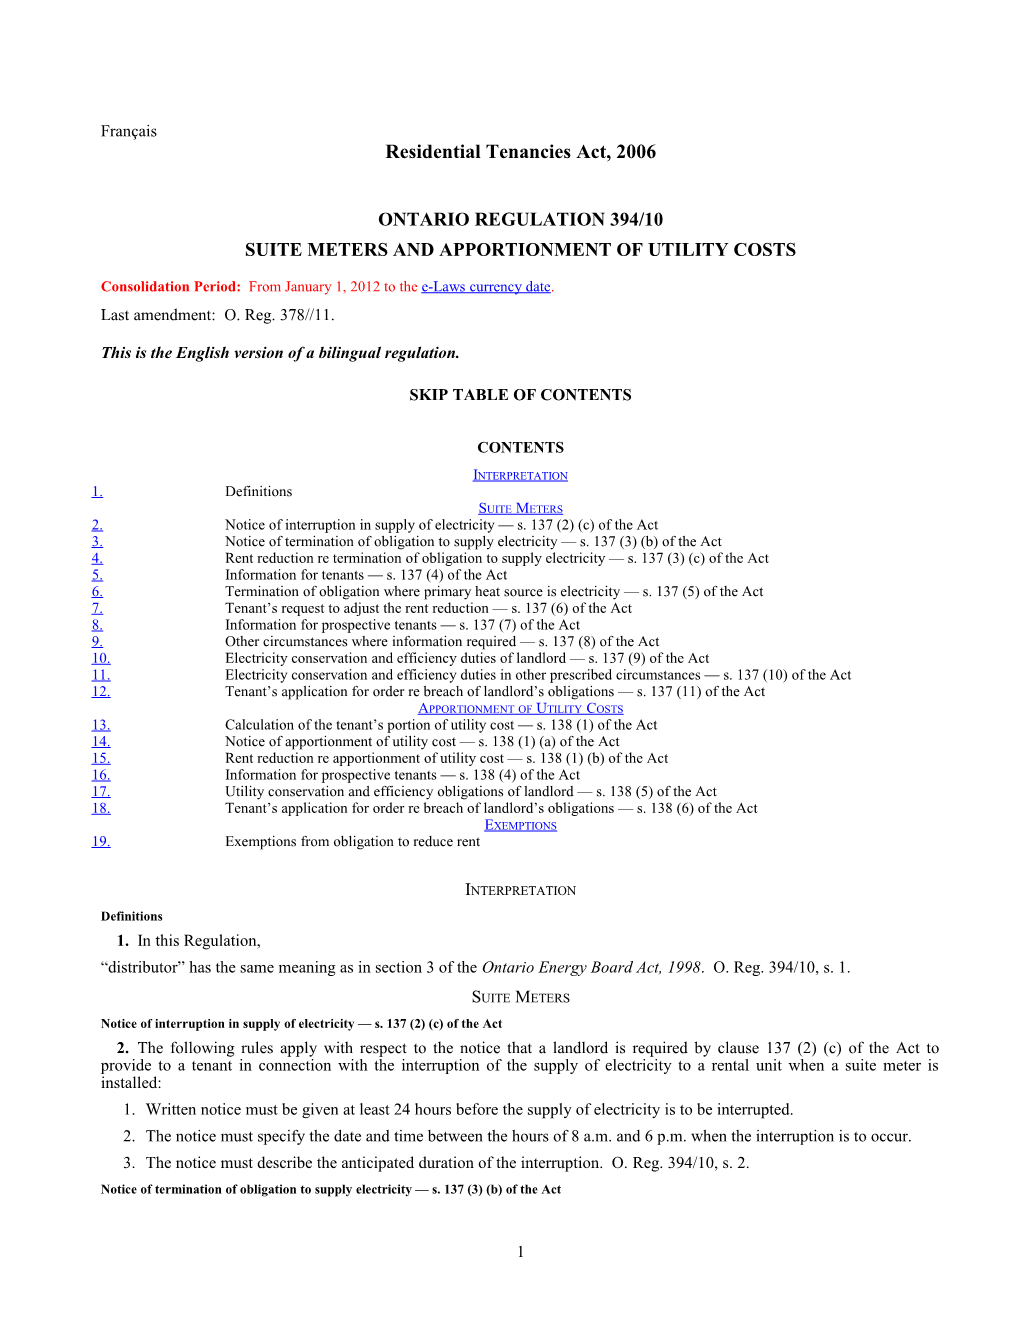 Residential Tenancies Act, 2006 - O. Reg. 394/10